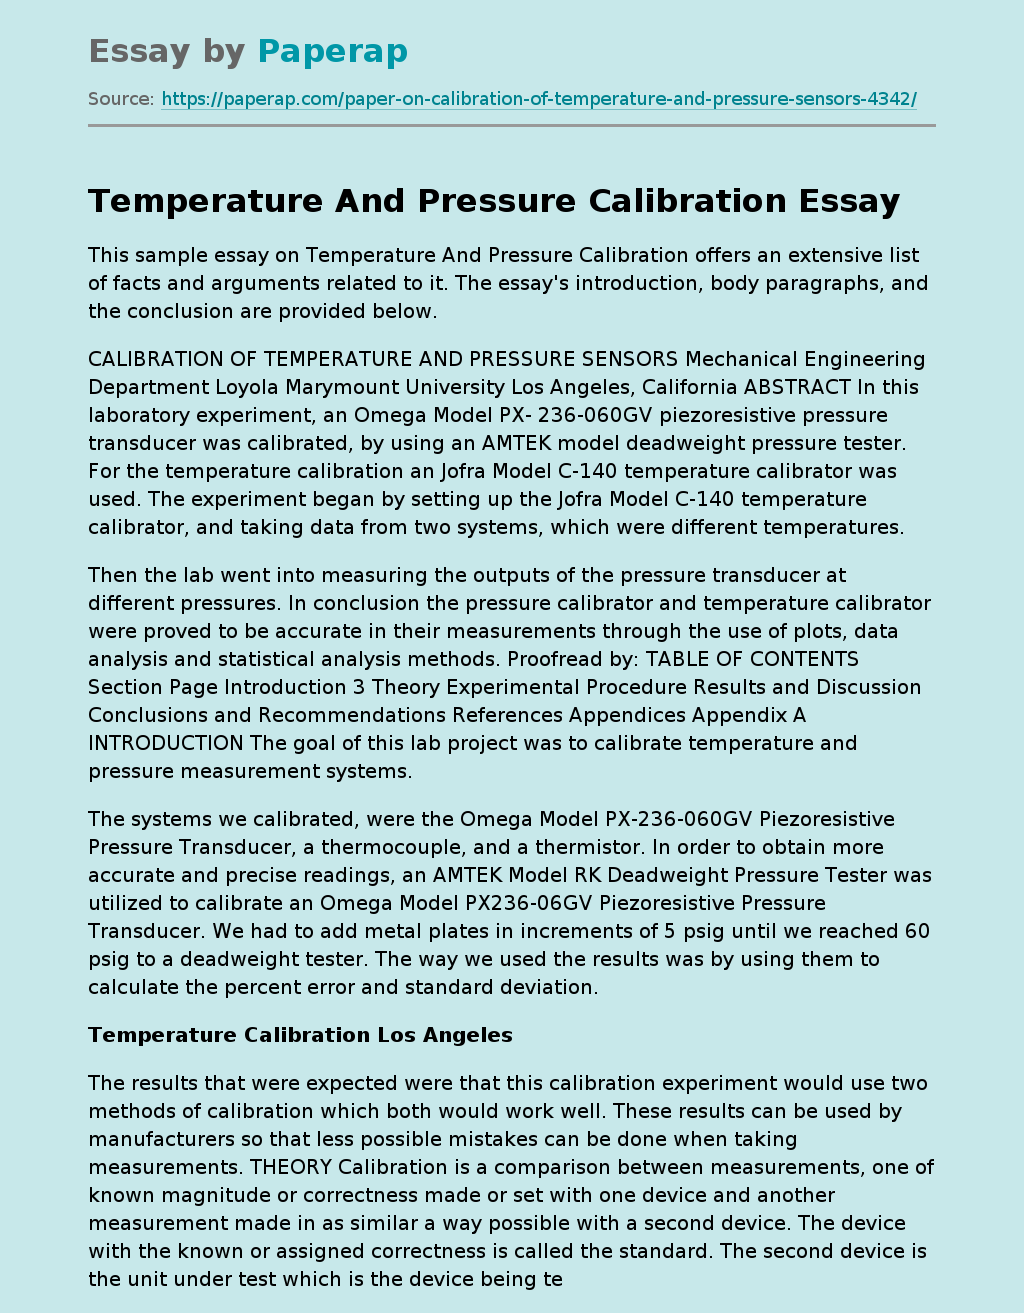 Calibration of Temperature and Pressure Sensors